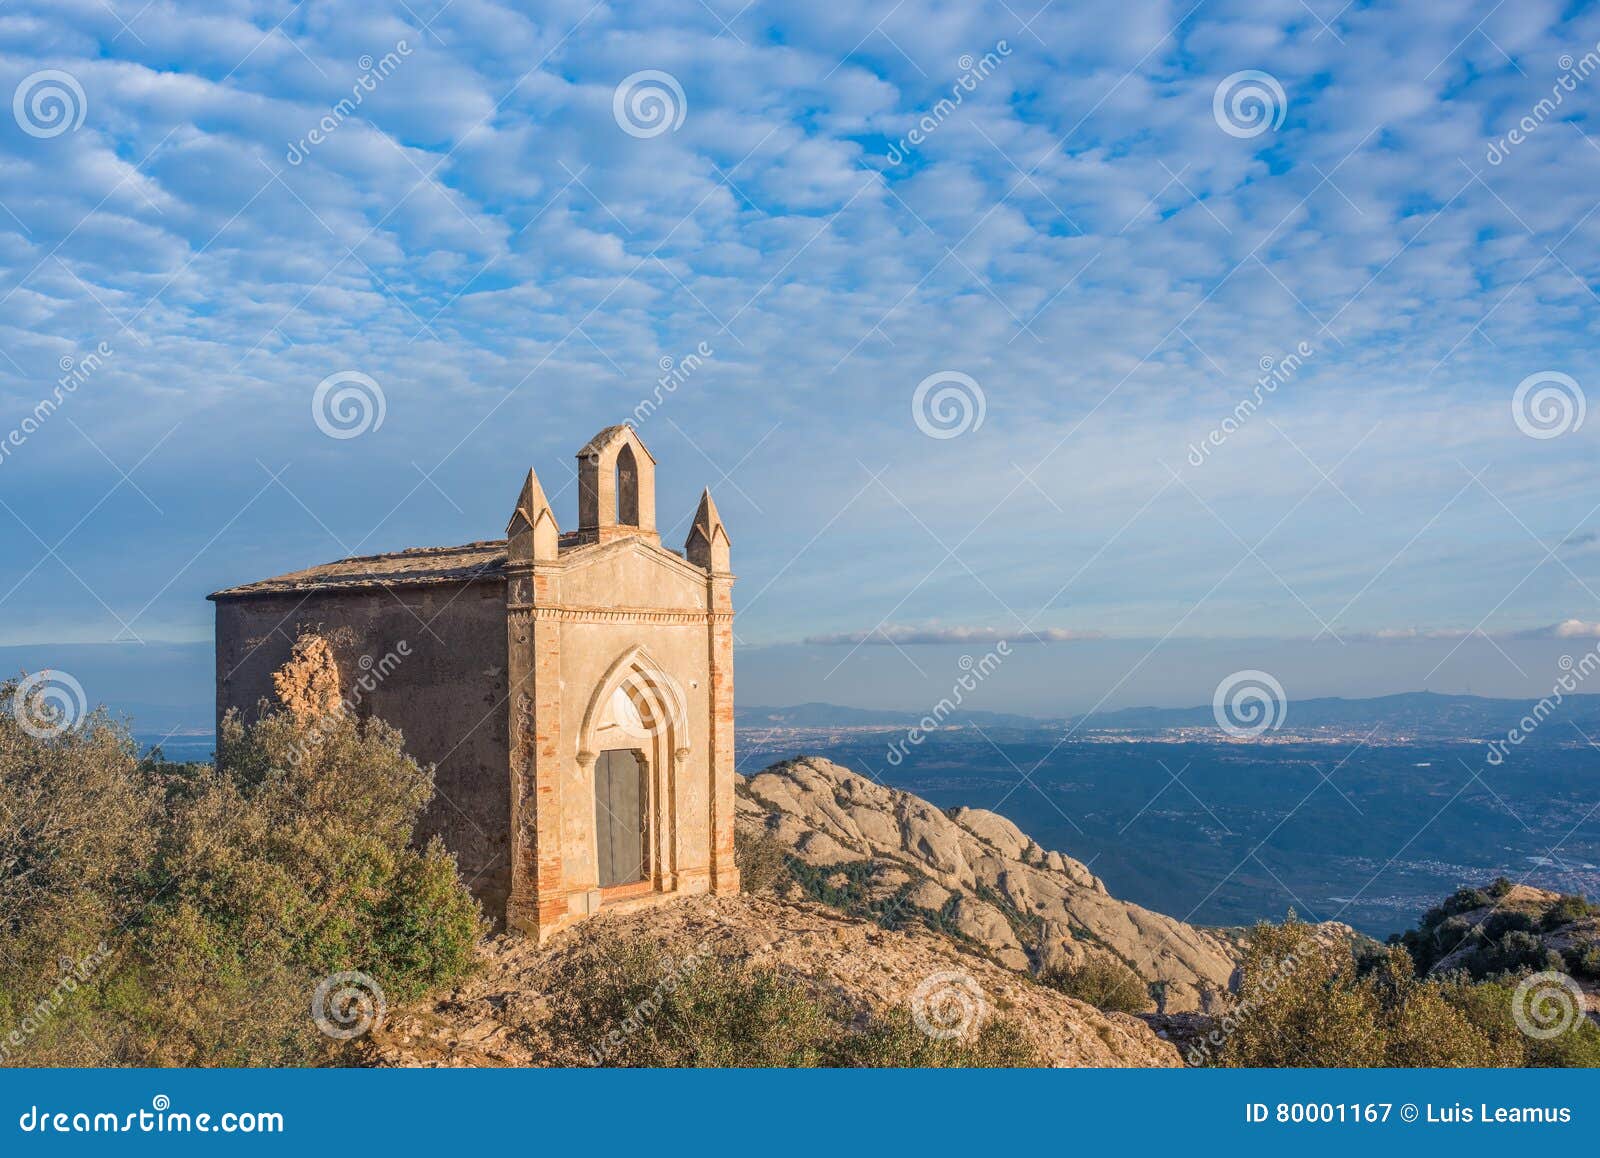 chapel of sant joan, montserrat, catalonia, spain